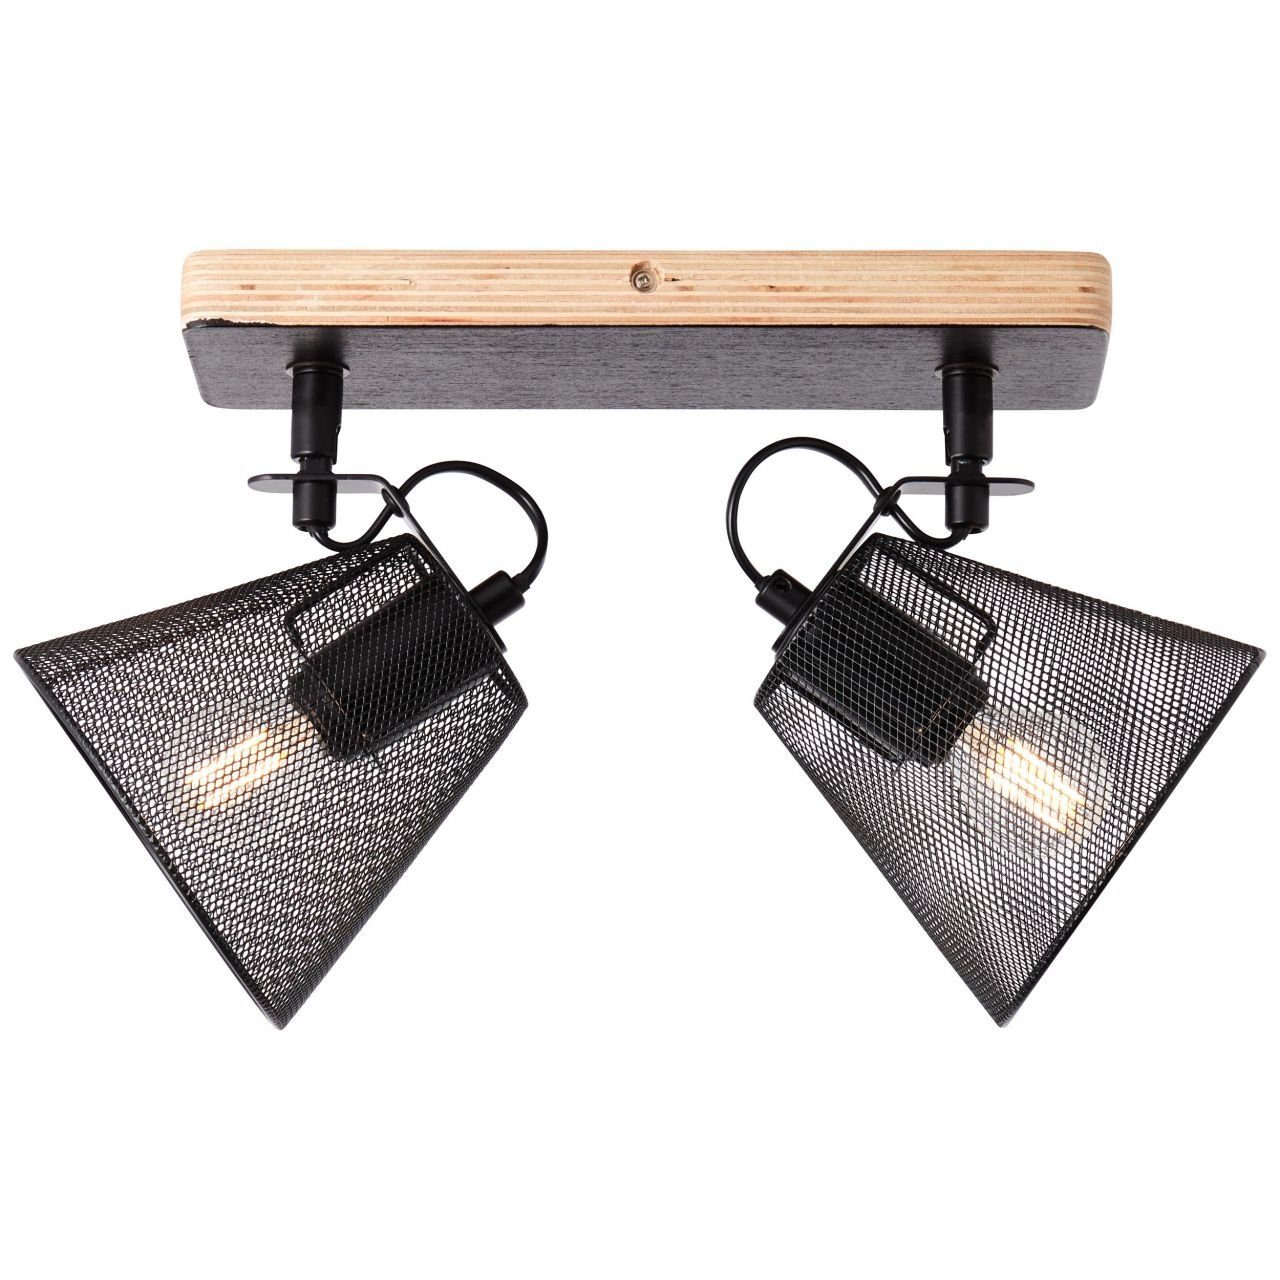 Spotbalken 2x D45 Whole, 2flg Brilliant Lampe, Whole schwarz/holzfarbend, Metall/Holz, Deckenleuchte